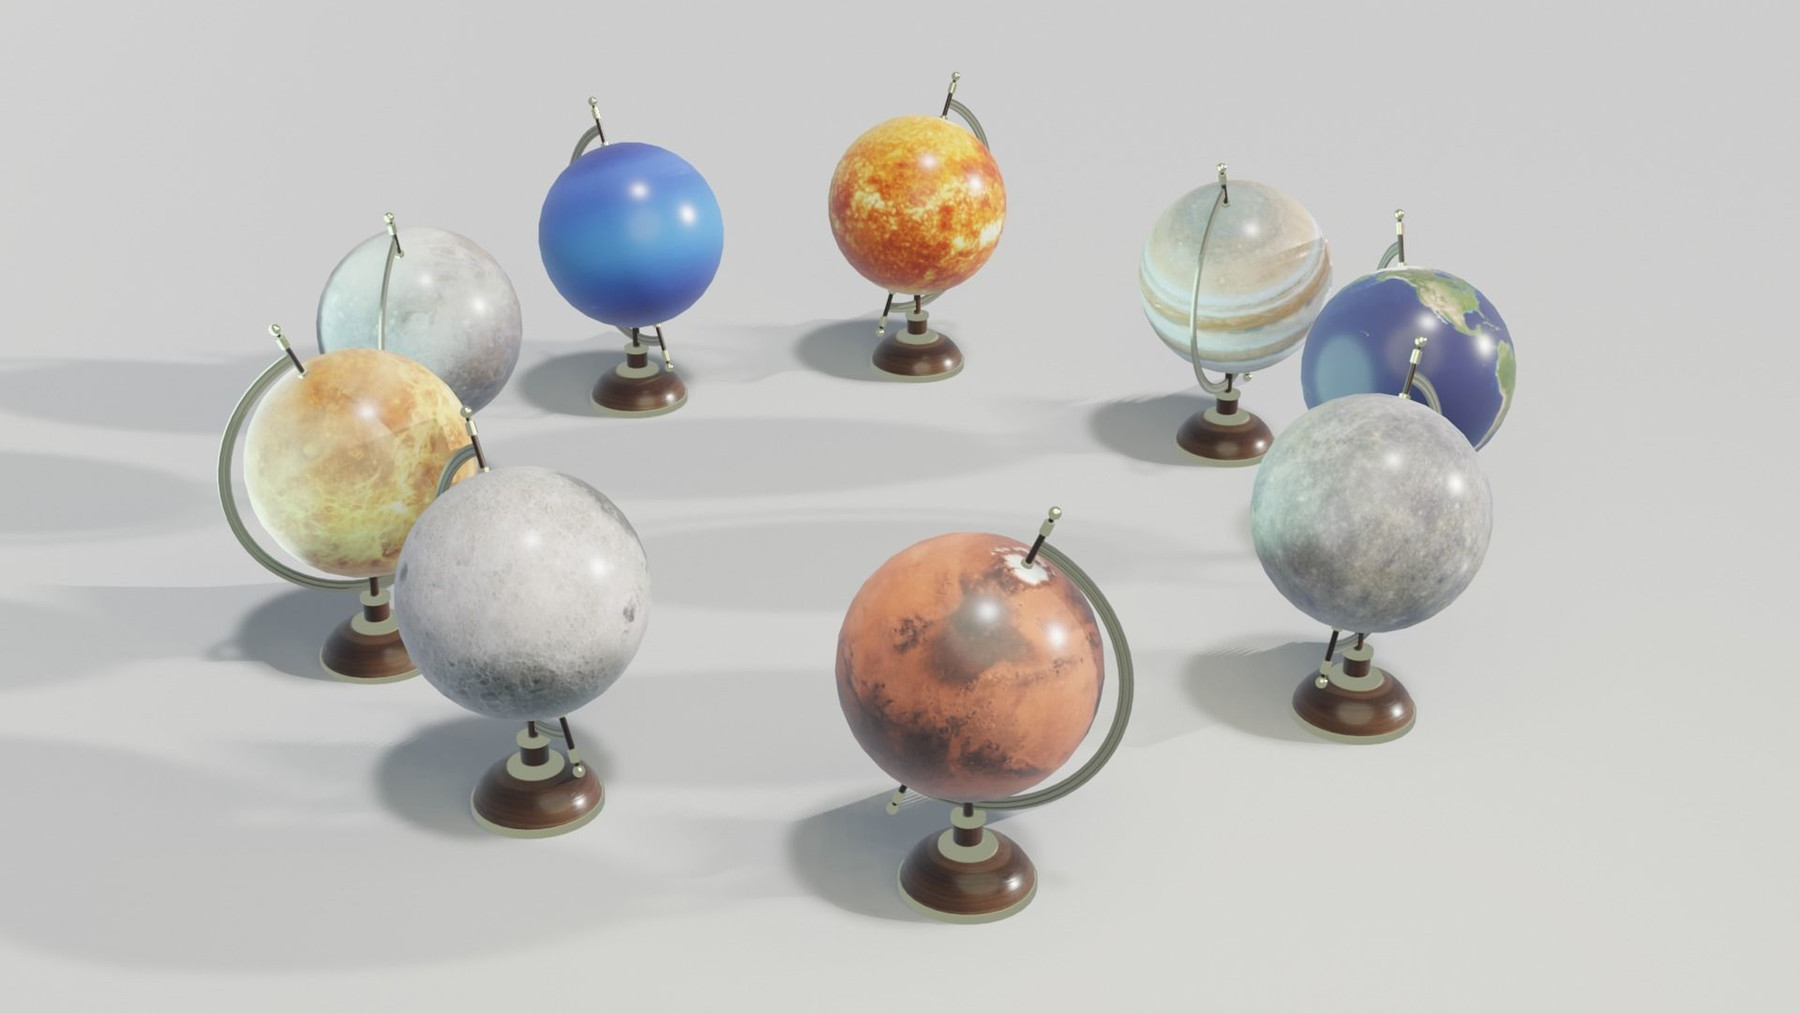 Solar System Planets Model